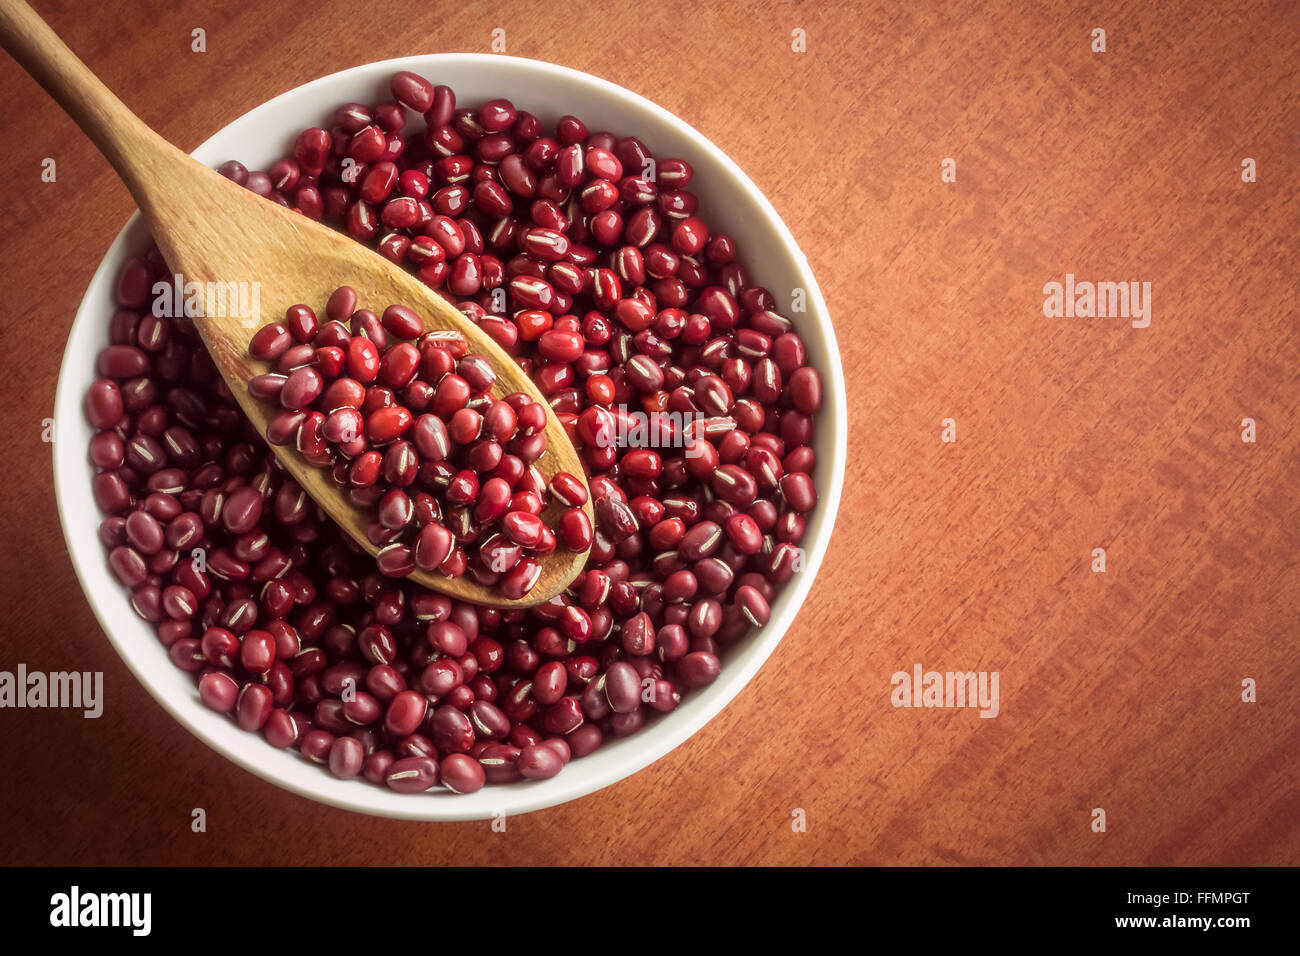 Adzuki beans in white bowl with copy space Stock Photo